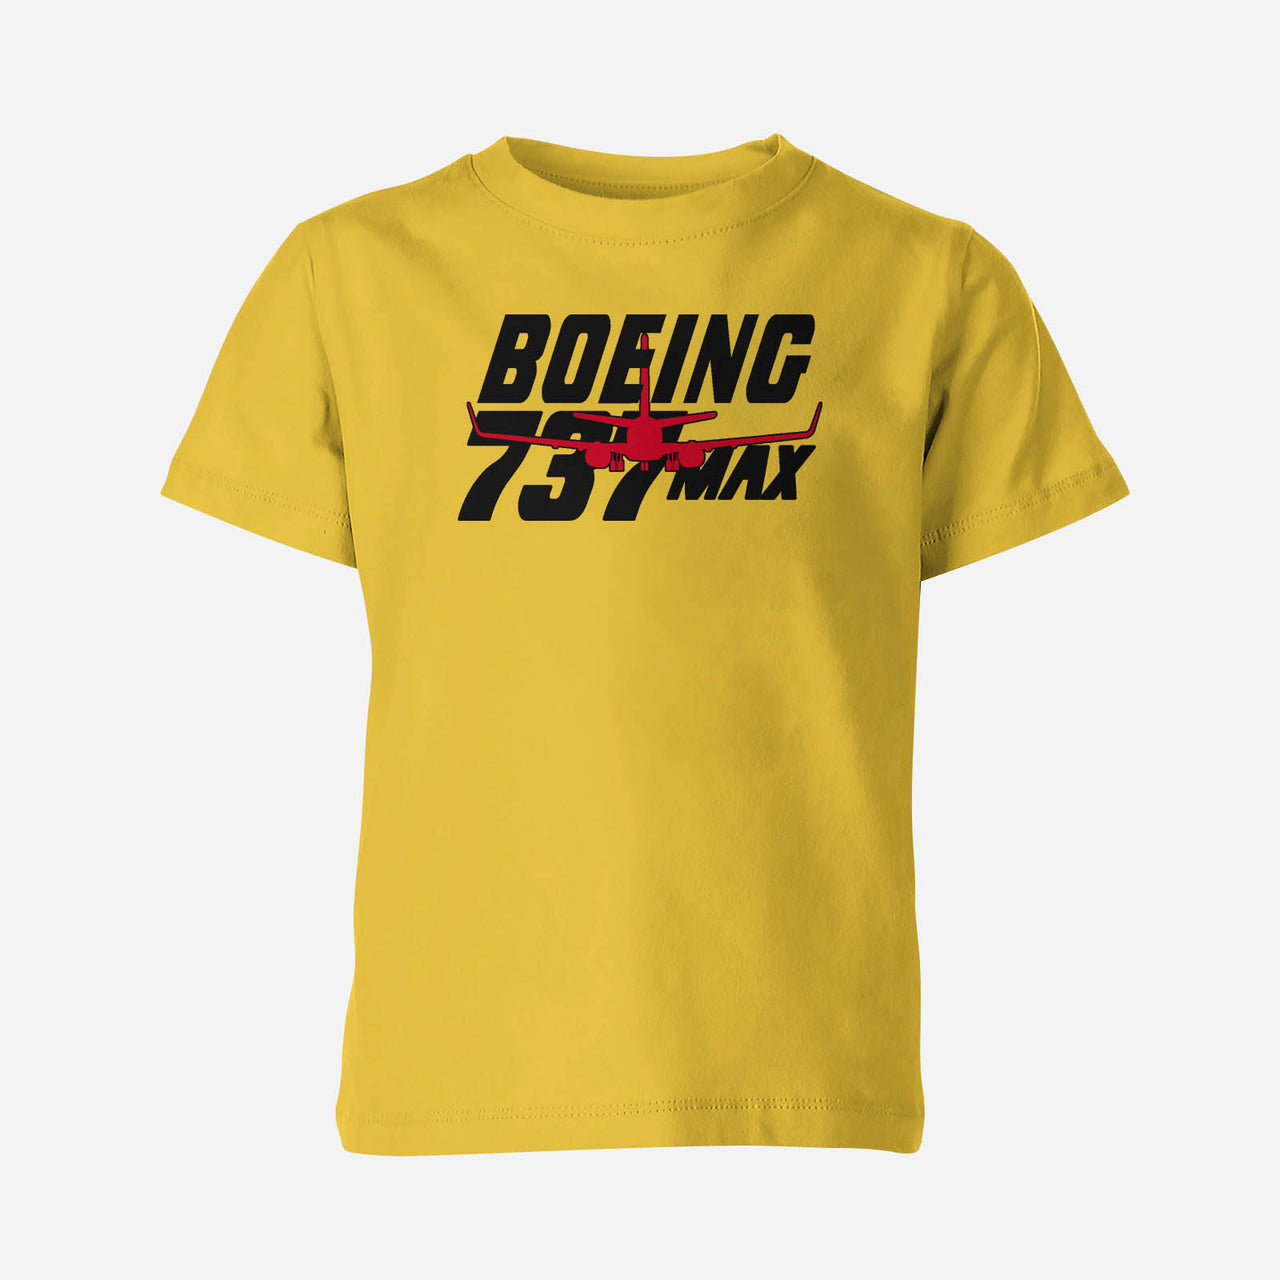 Amazing Boeing 737 Max Designed Children T-Shirts